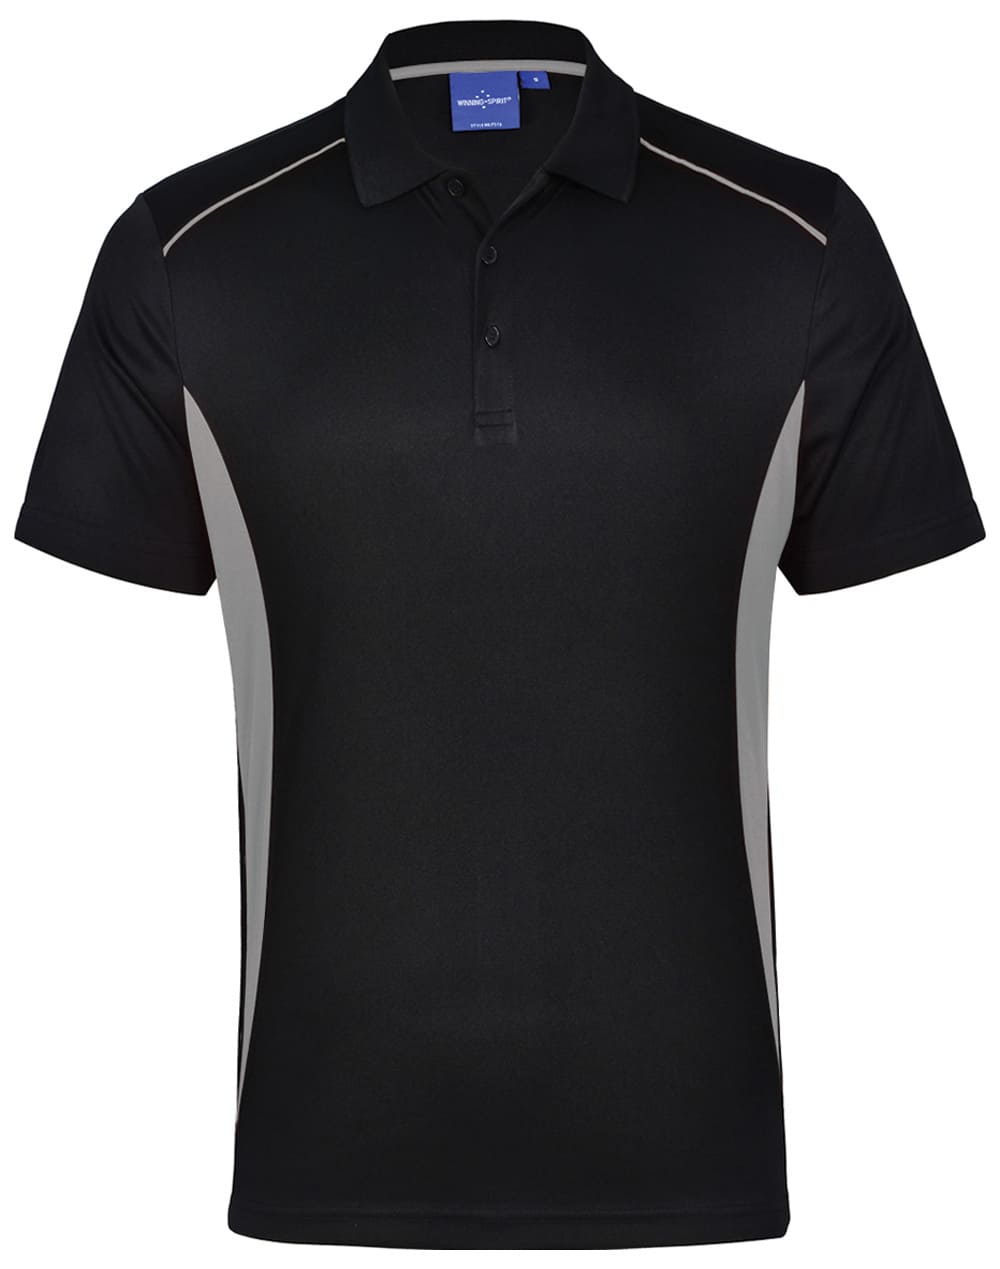 Custom (Charcoal Aqua Blue) Pursuit Contrast Polo Shirt Mens Short Sleeve Online Perth Australia